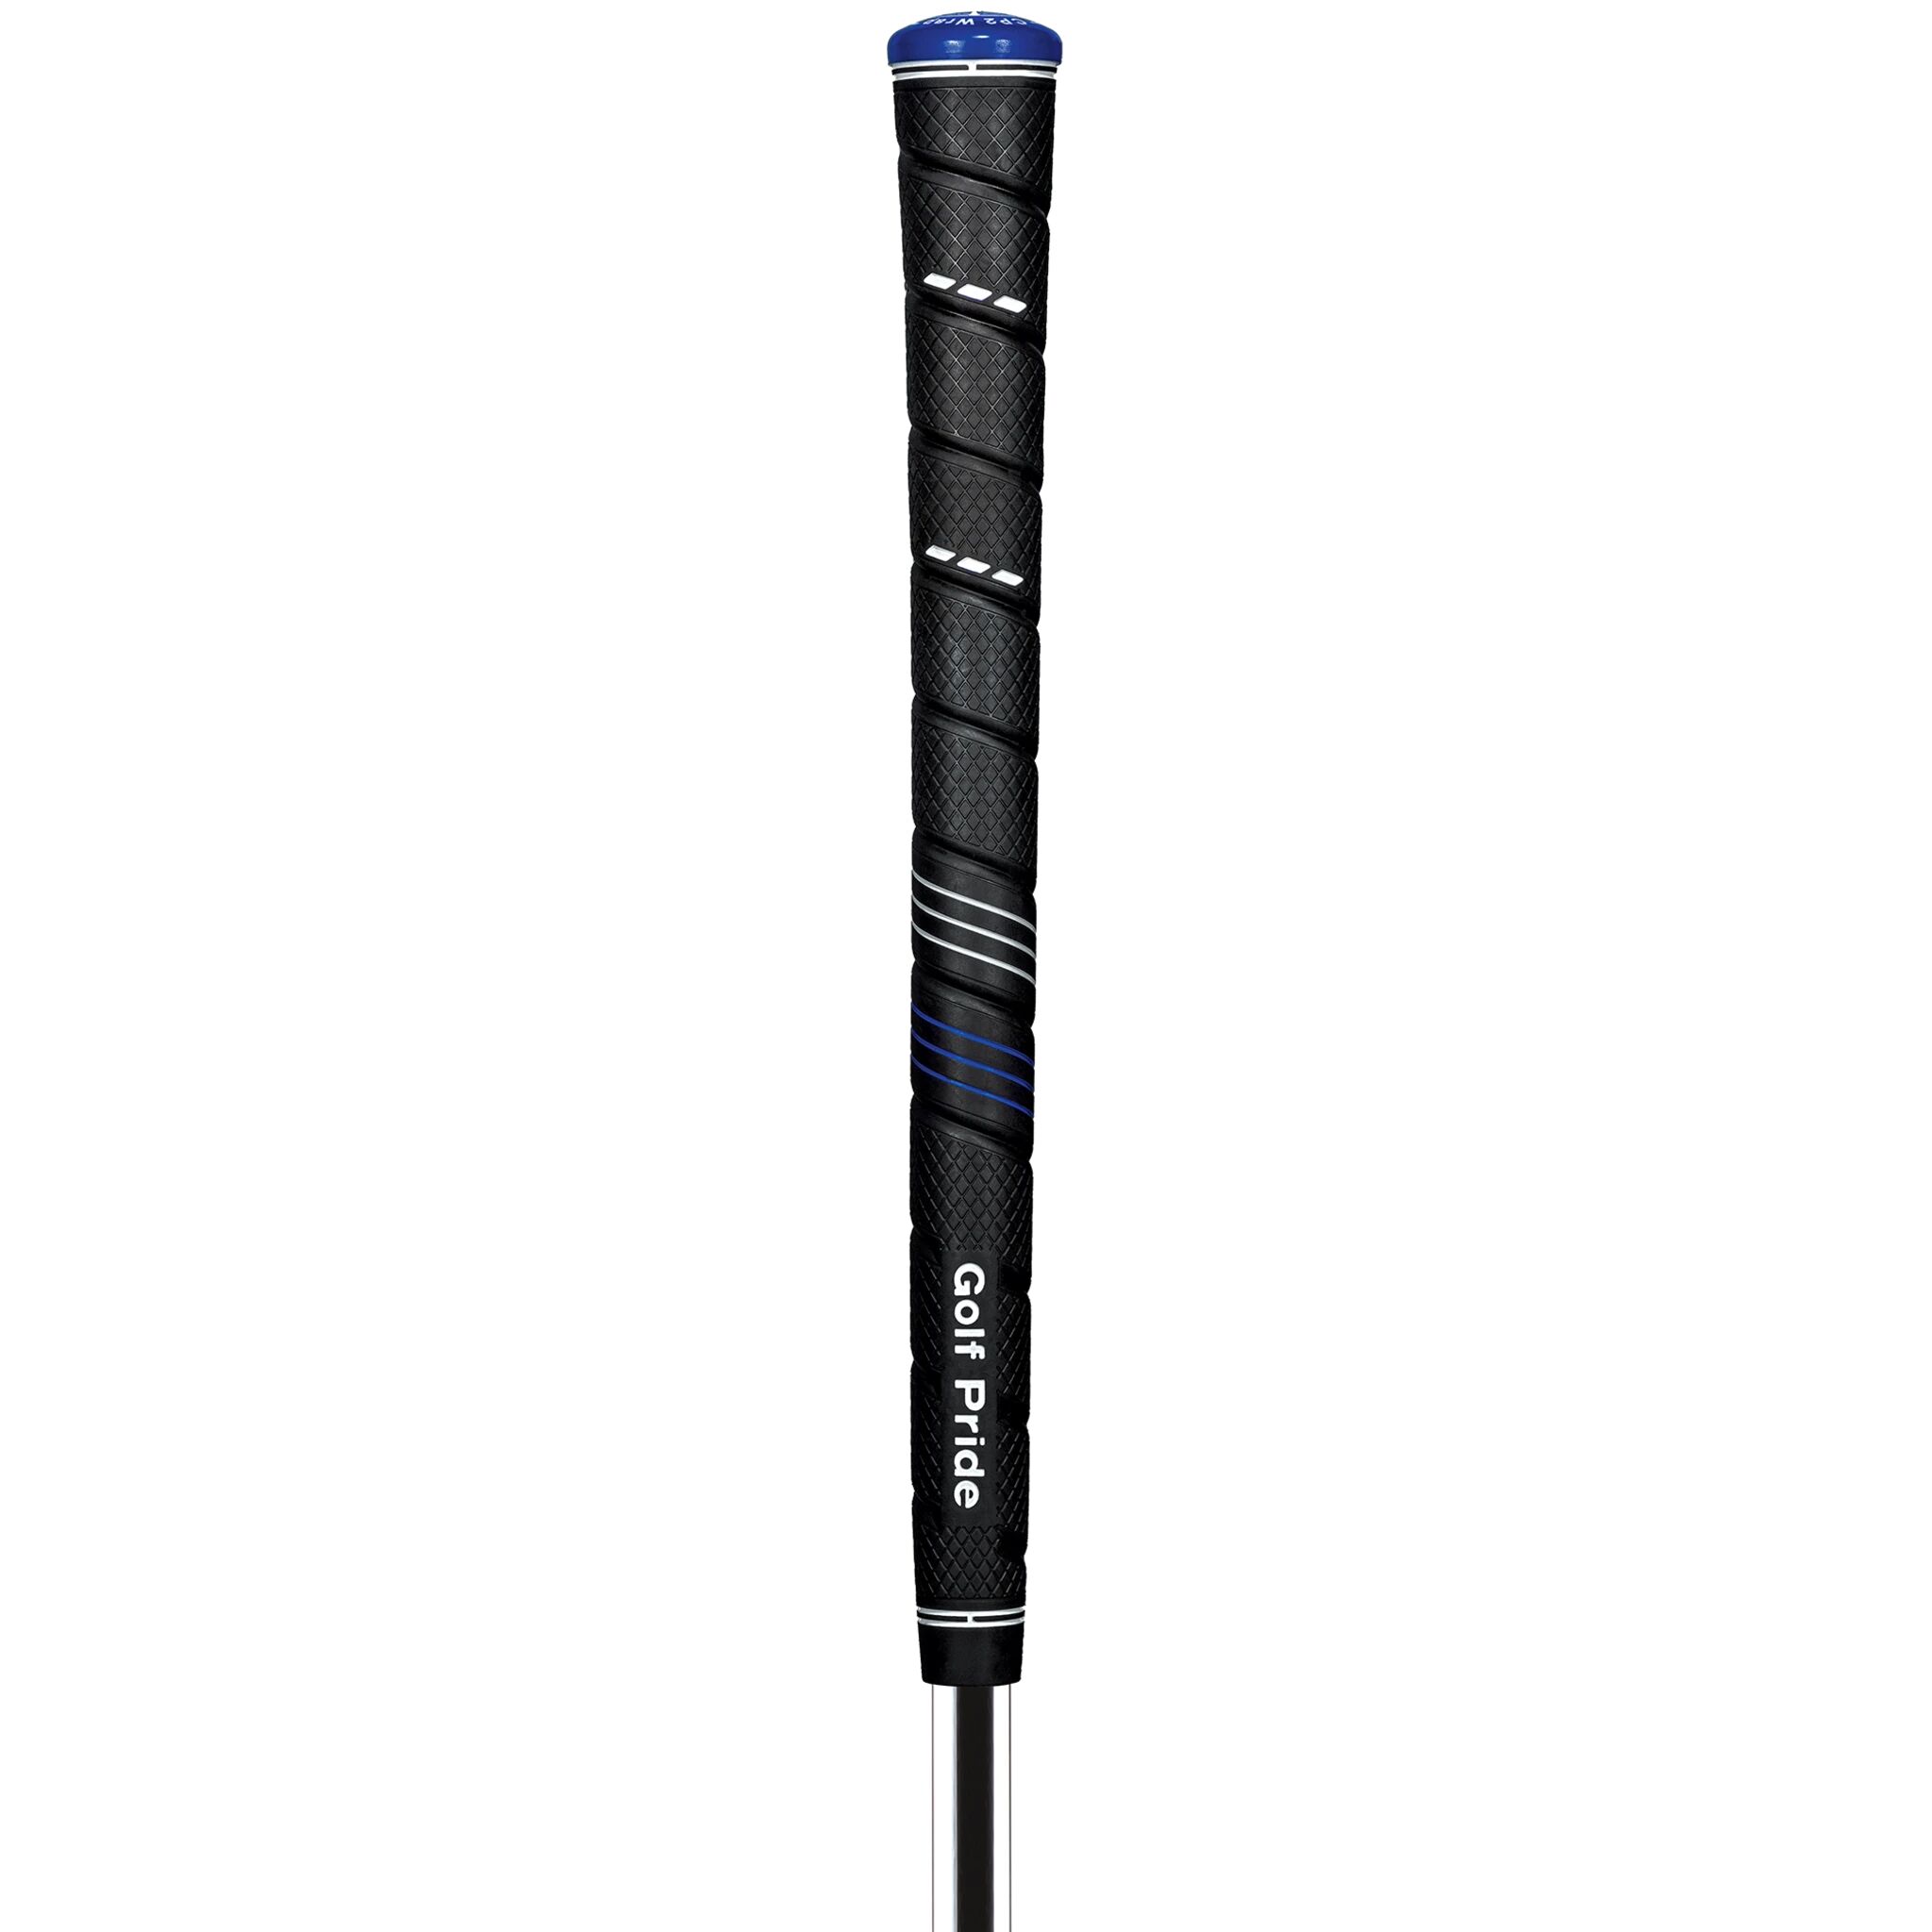 Golf Pride CP2 WRAP Standard, golfgrep STD BLACK